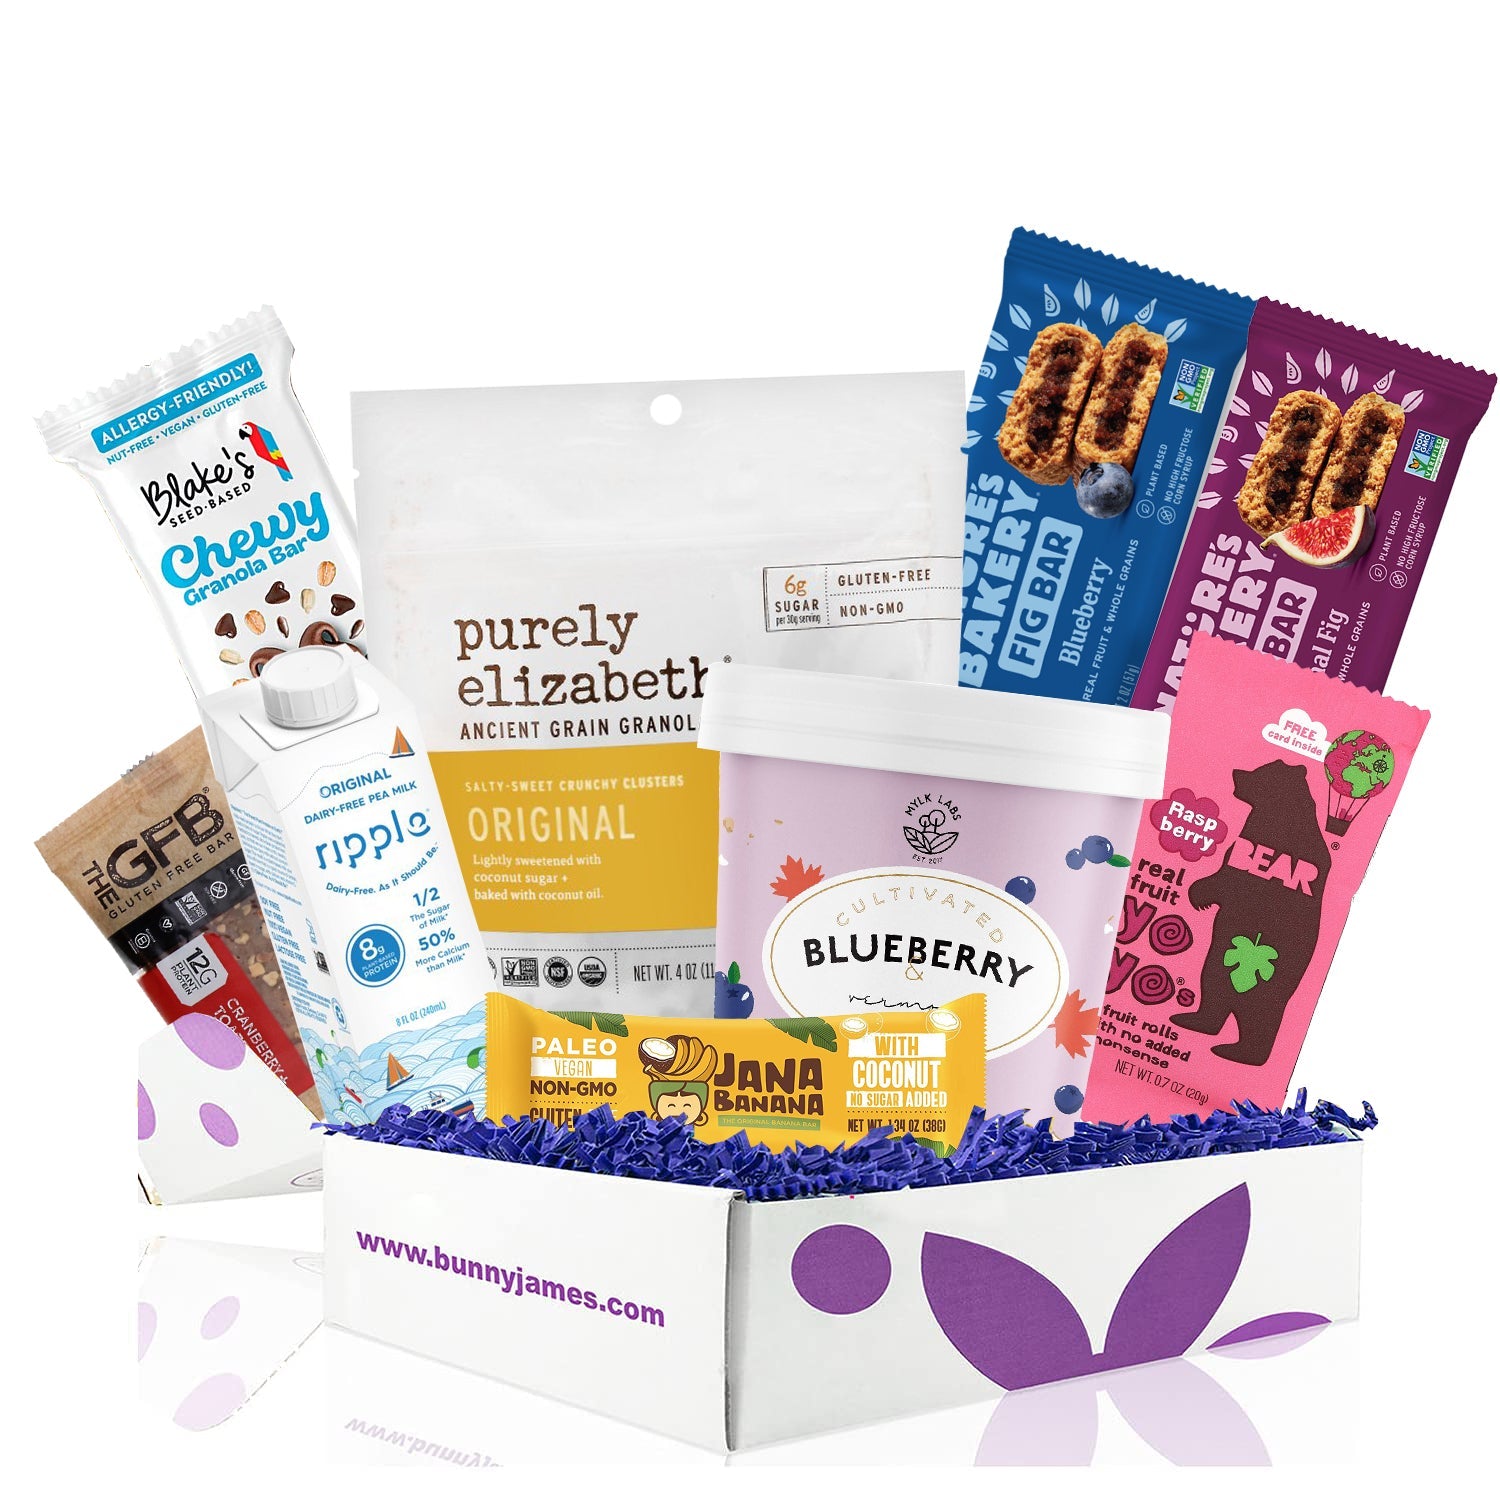 Bunny James Snack Boxes – Ultimate Keto Friendly Snacks Variety